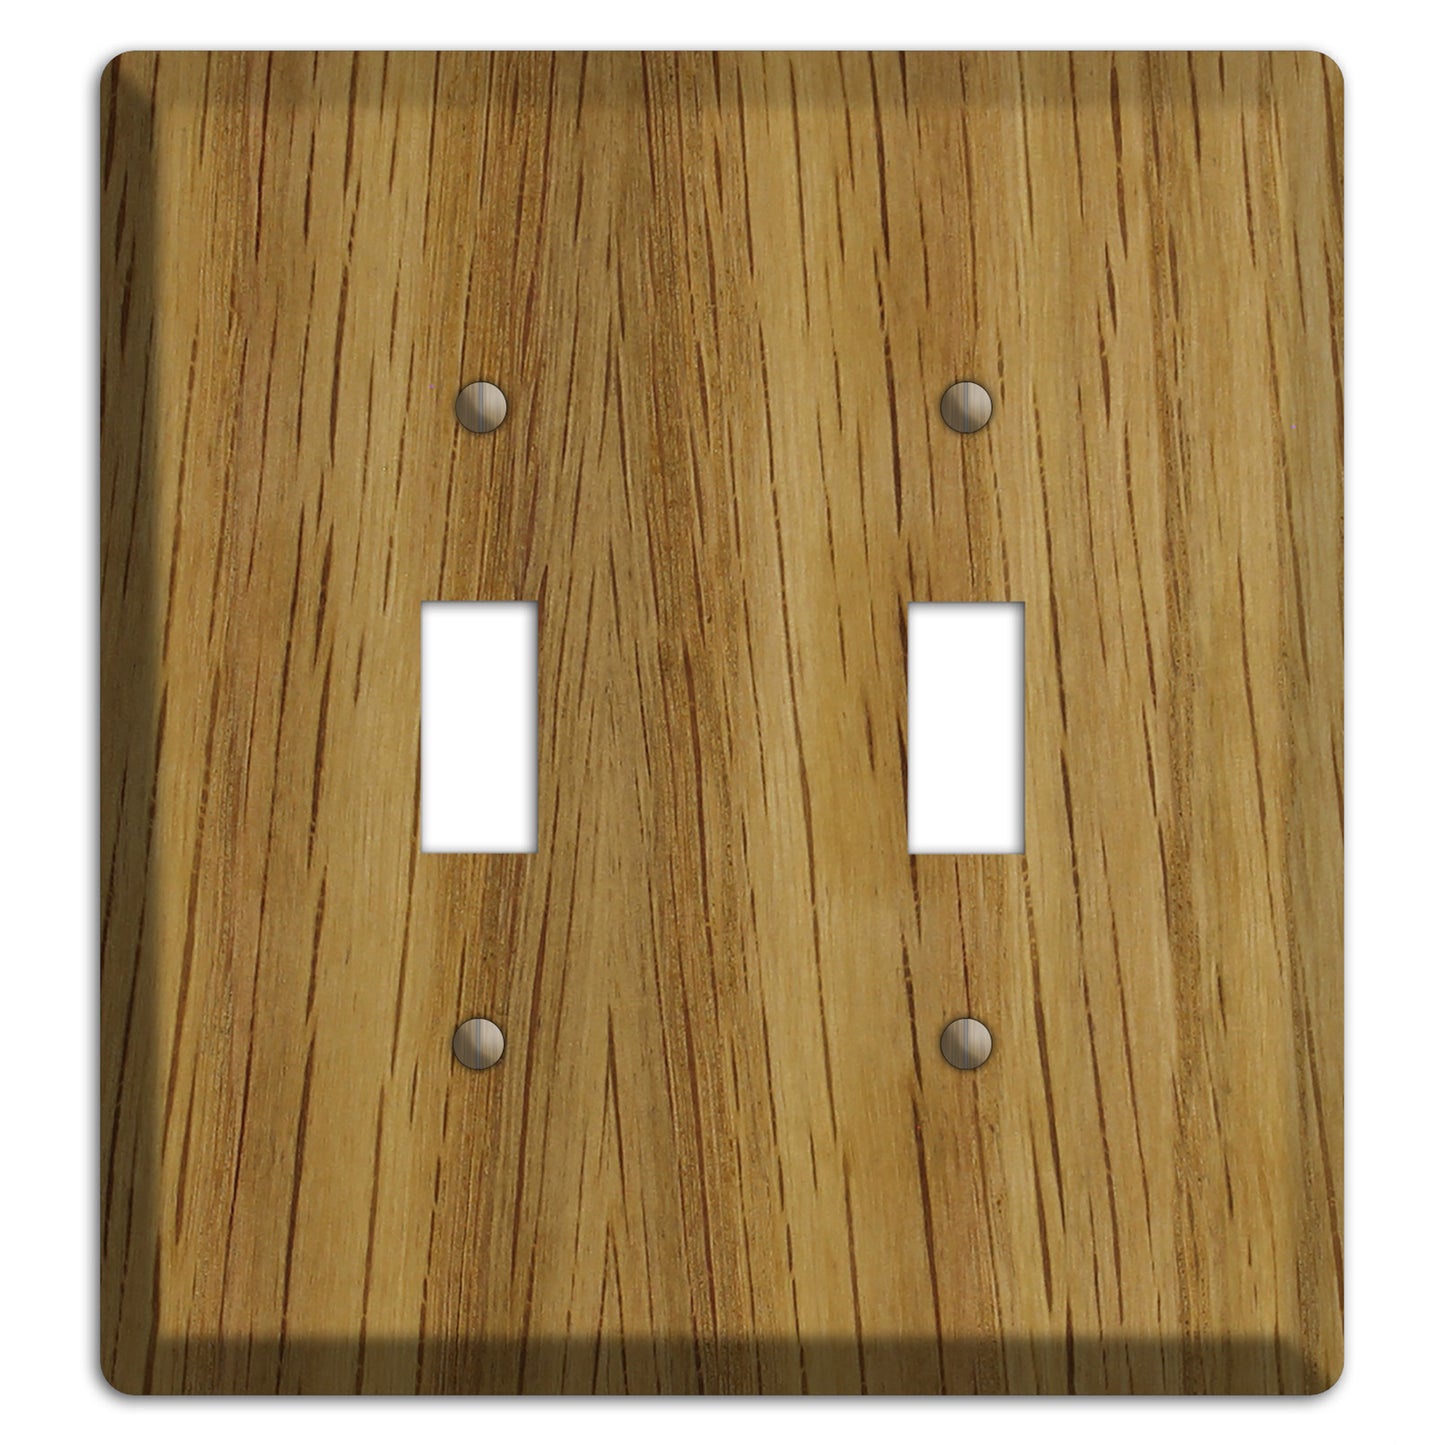 Unfinished White Oak Wood Double Toggle Switchplate